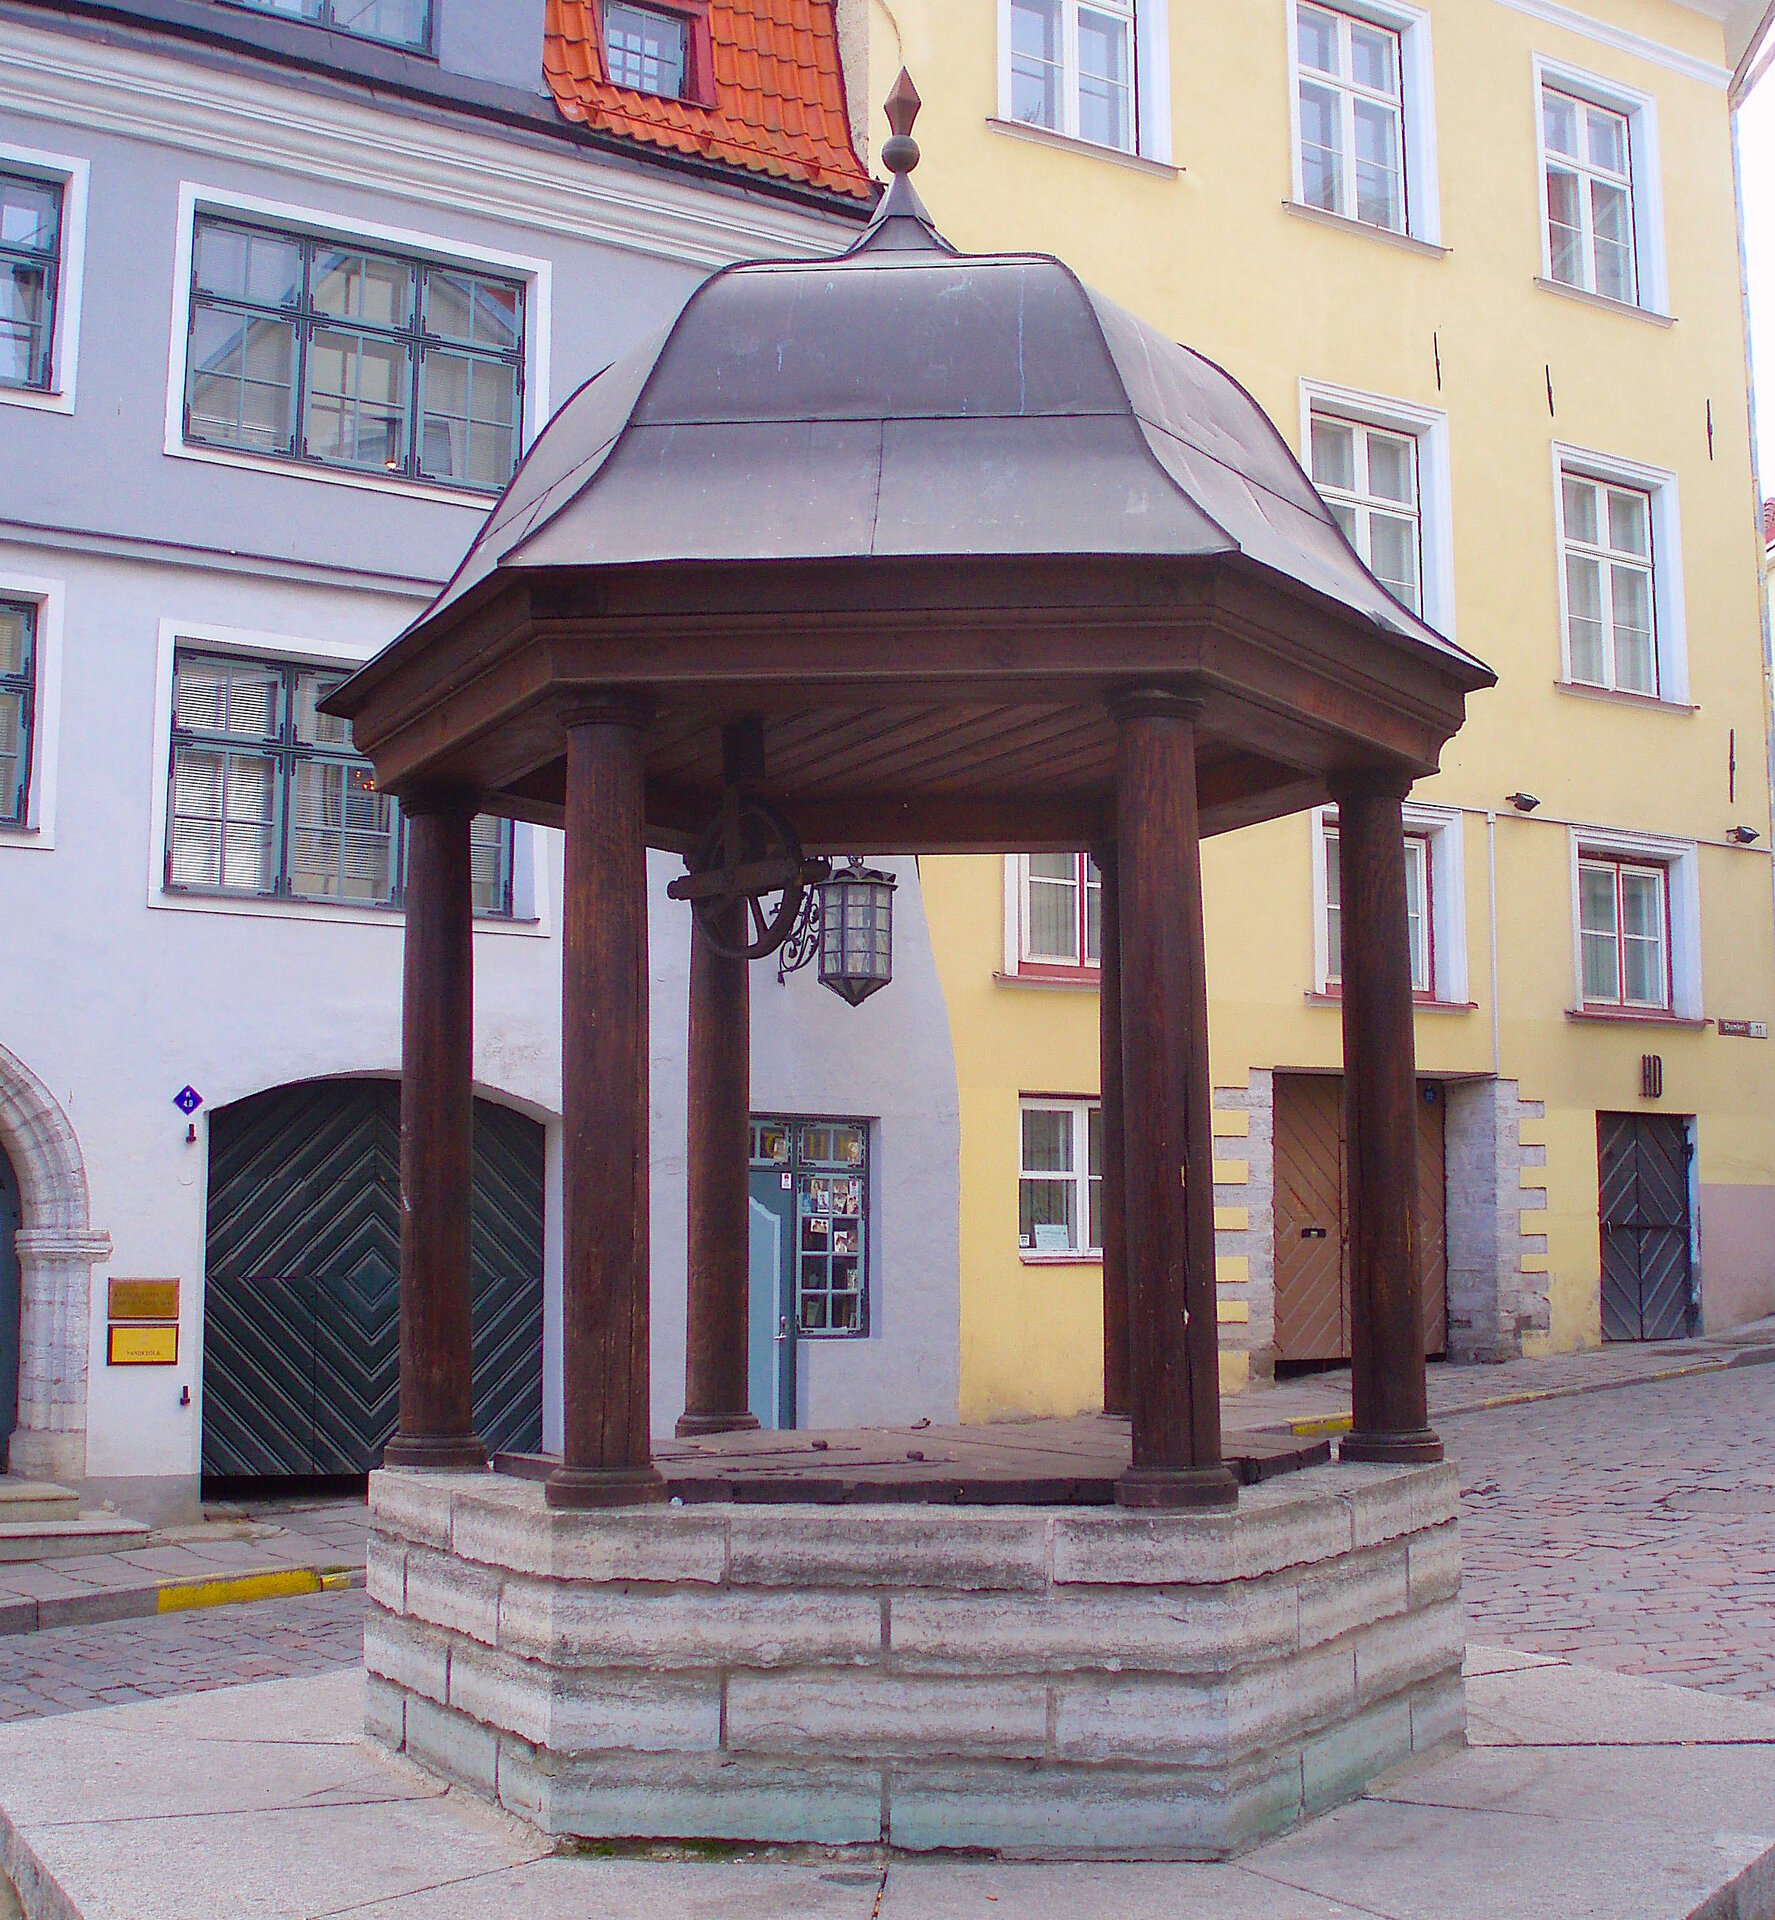 The Well of Rataskaevu